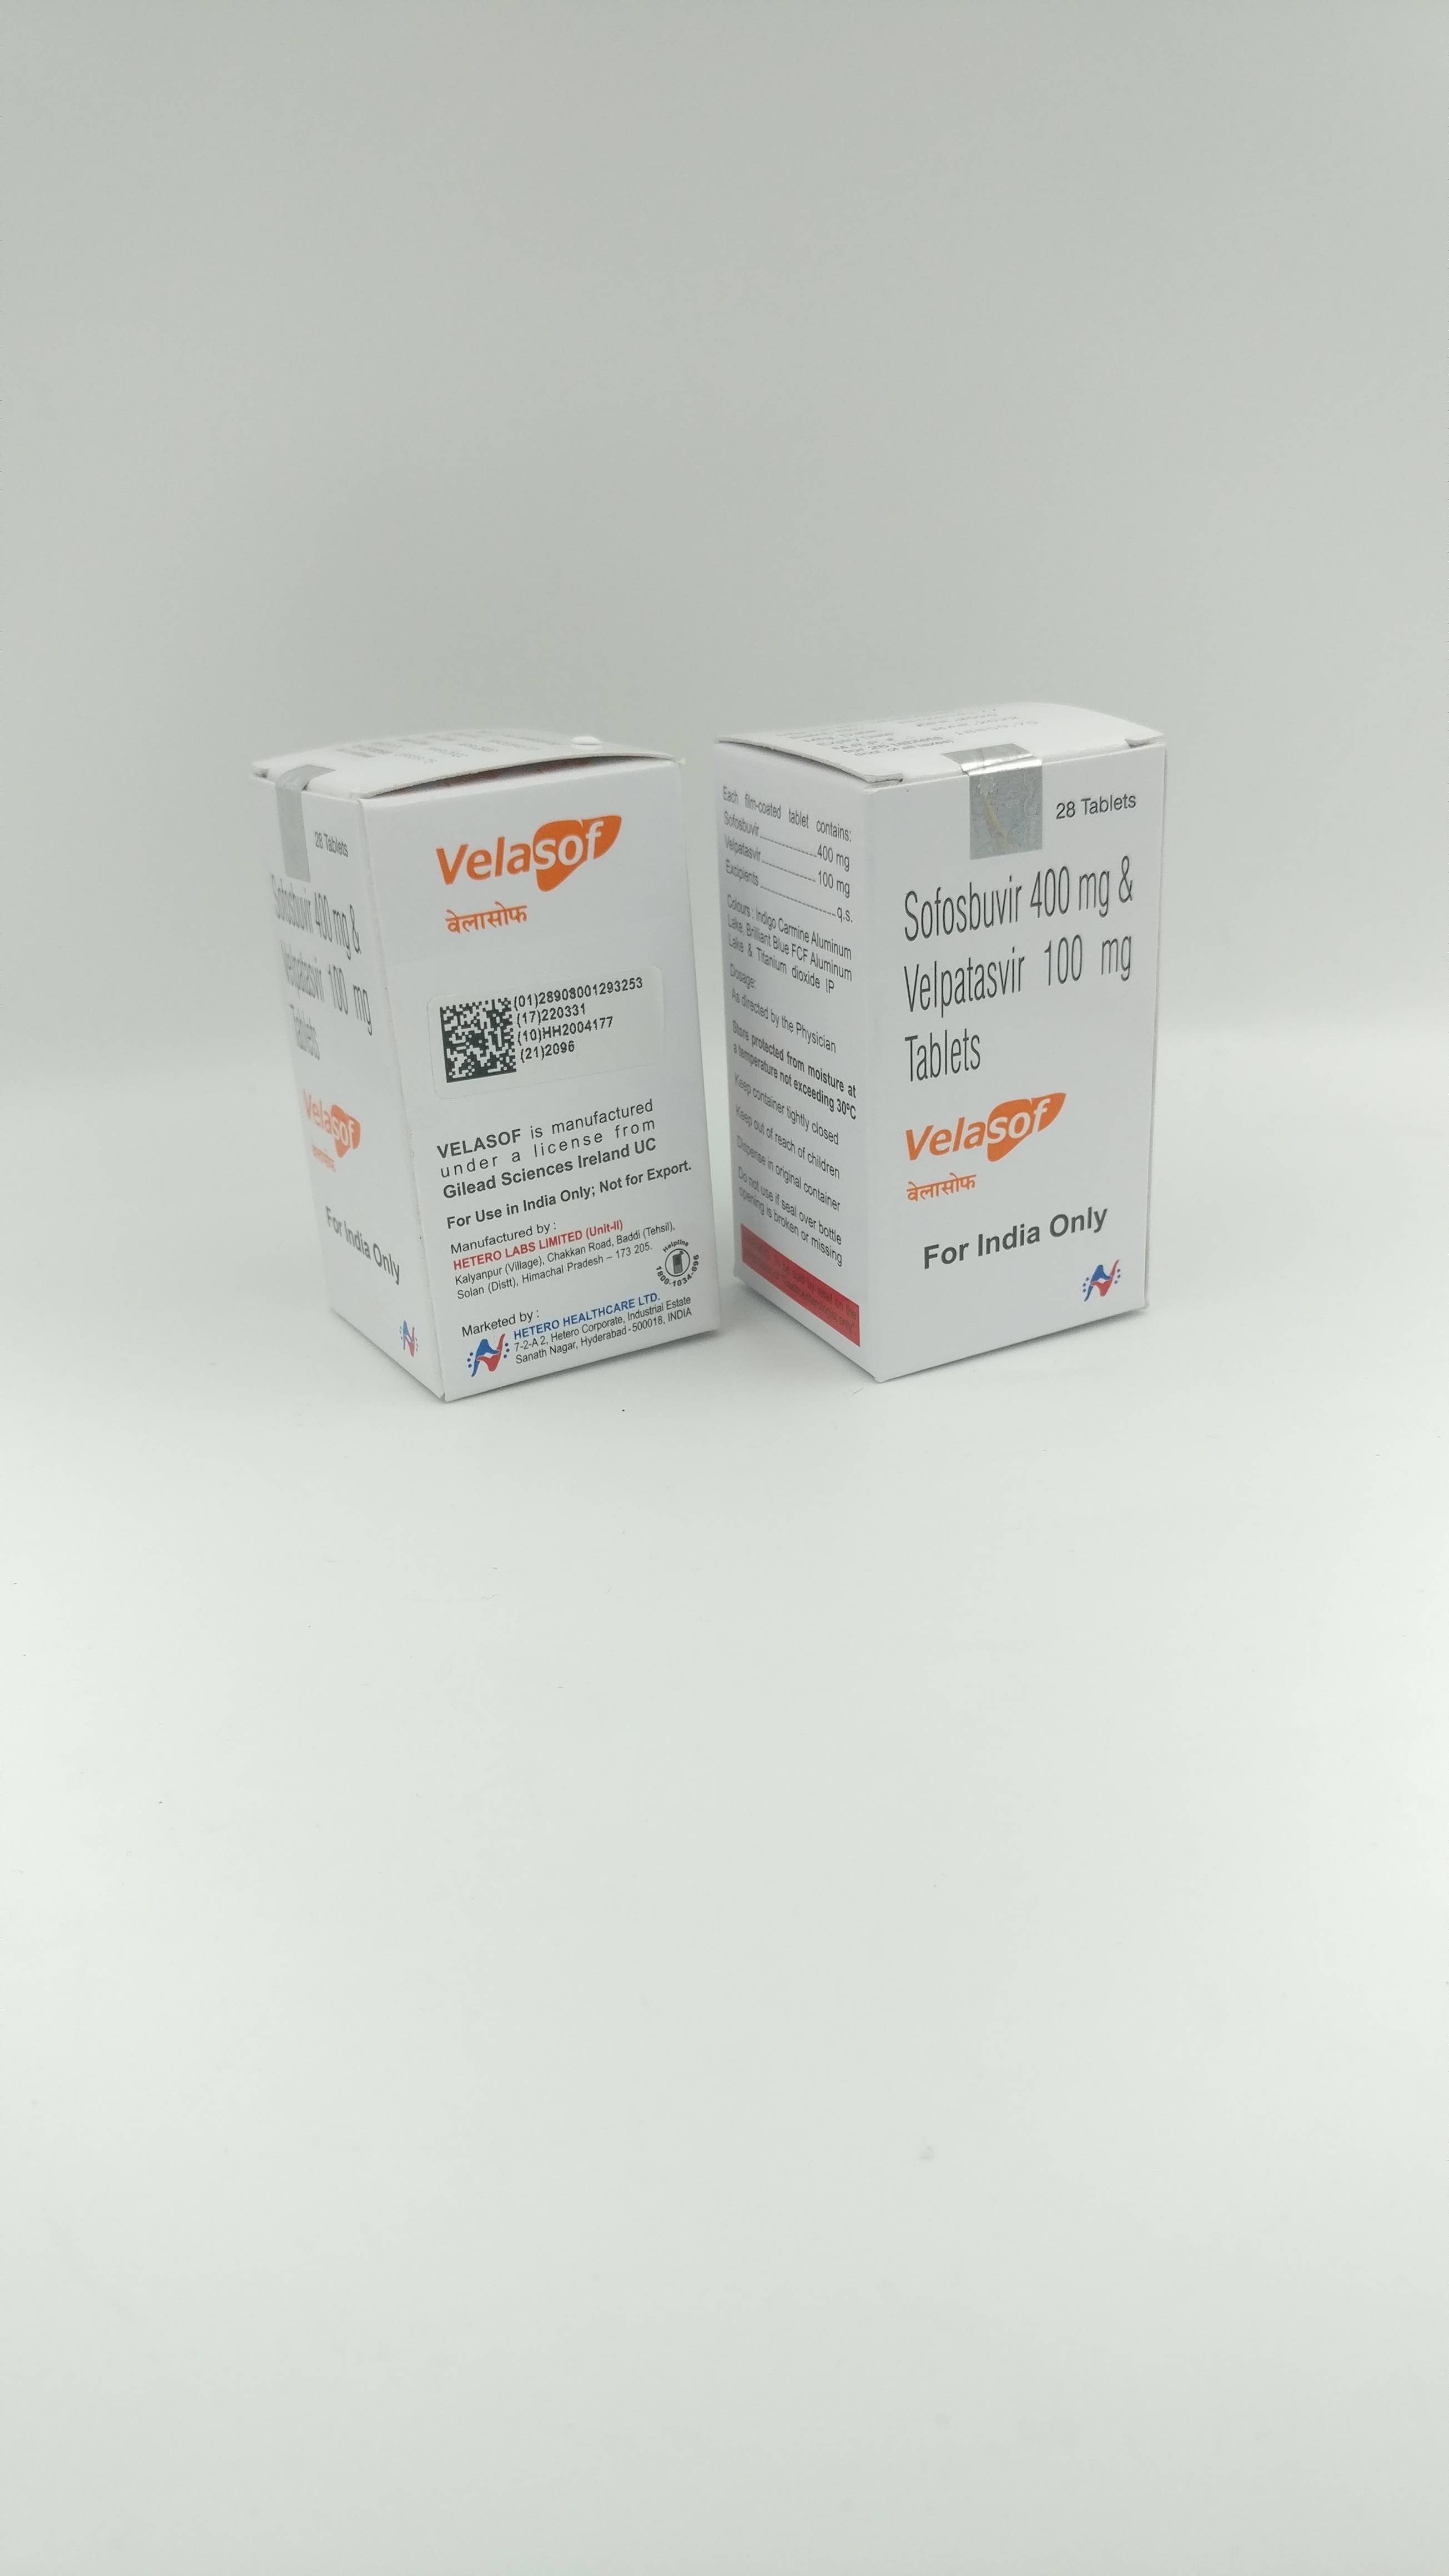 VELASOF Tablet(Velpatasvir 100 mg + Sofosbuvir 400 mg)